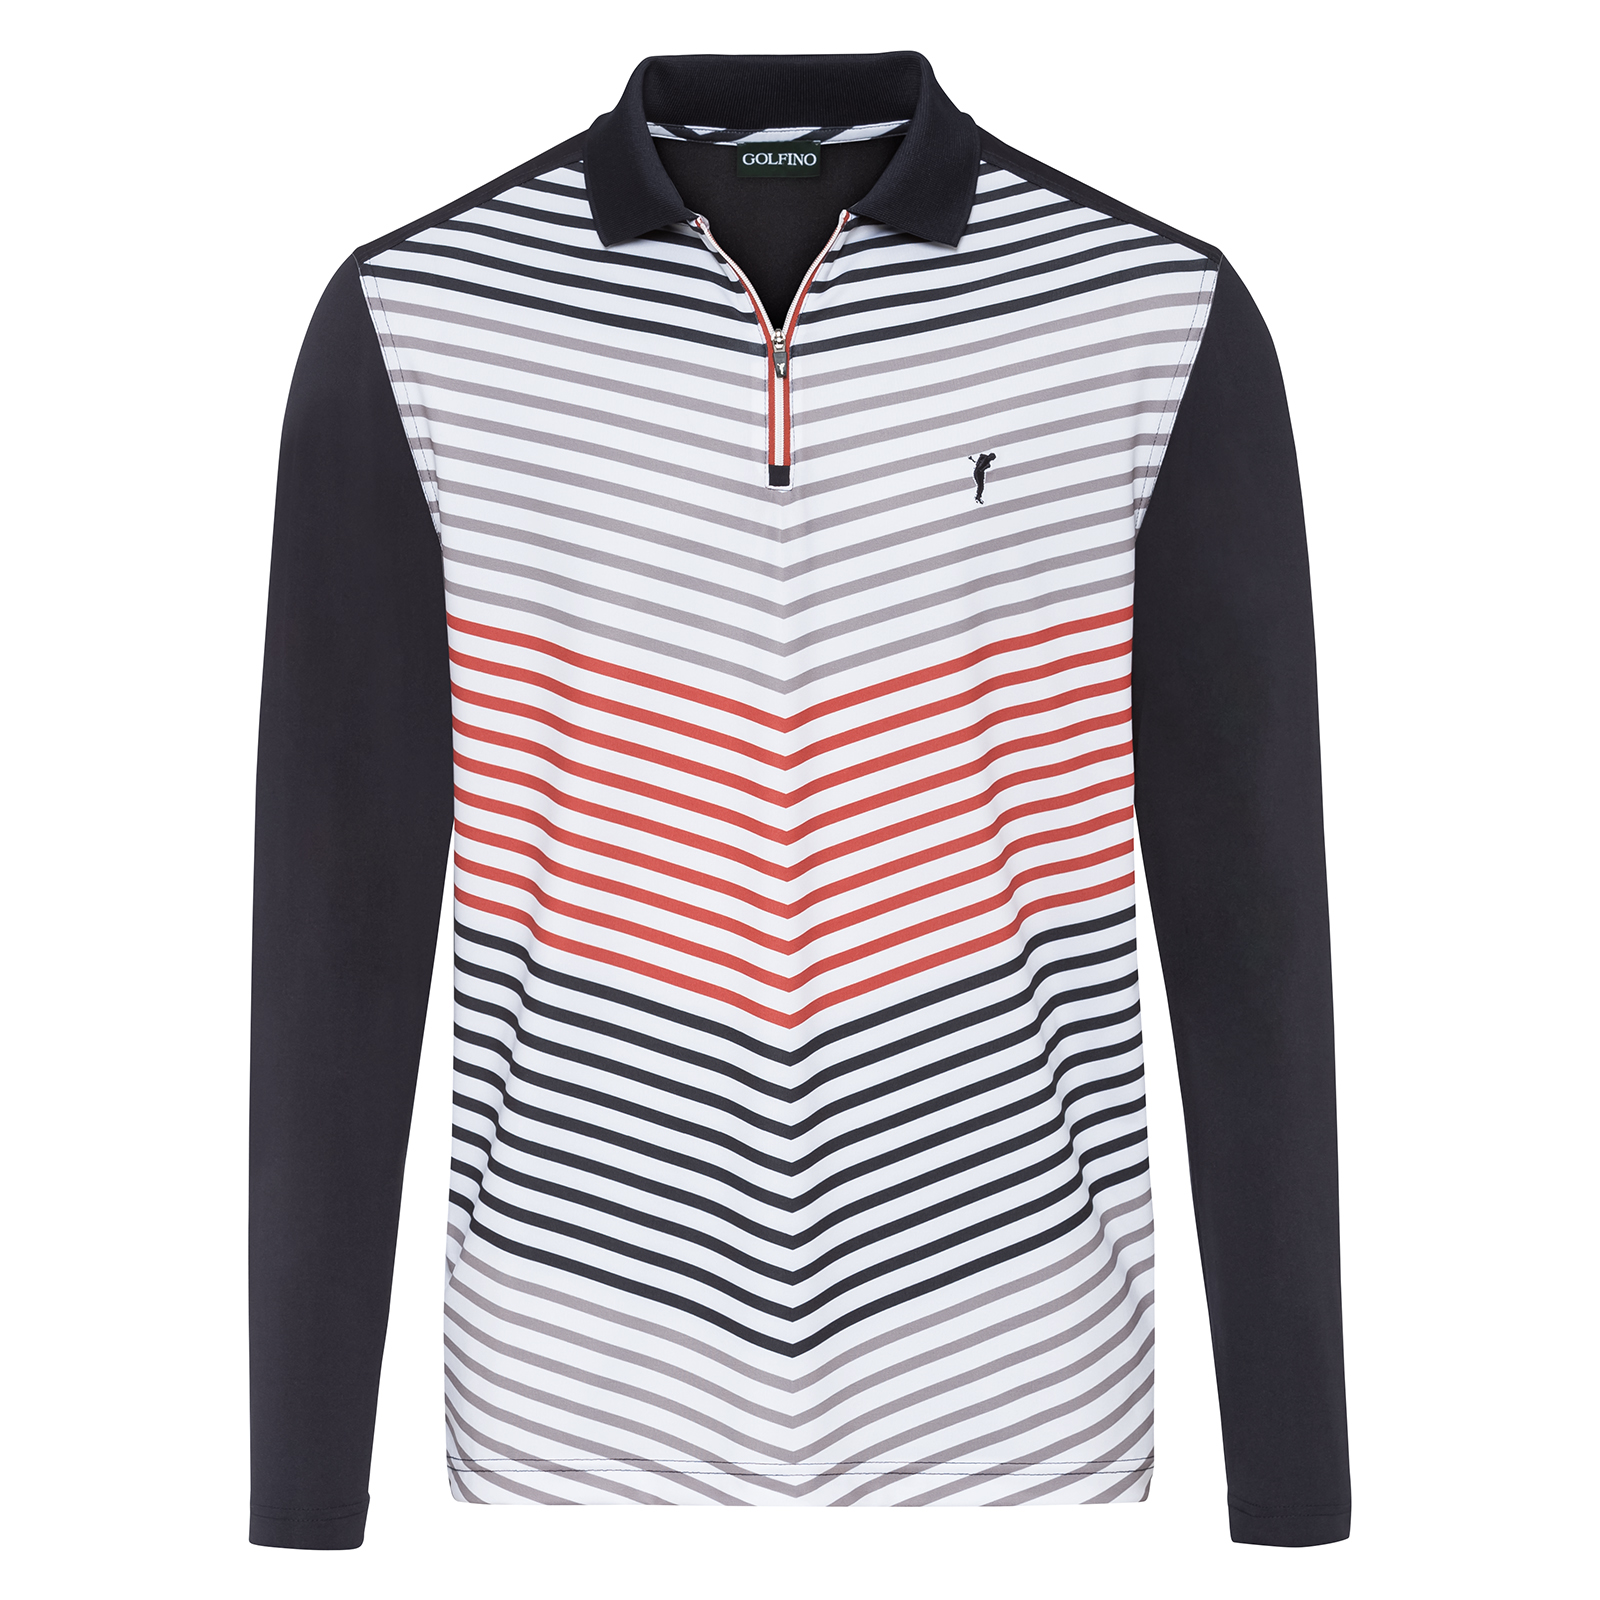 Men's striped golf polo shirt 